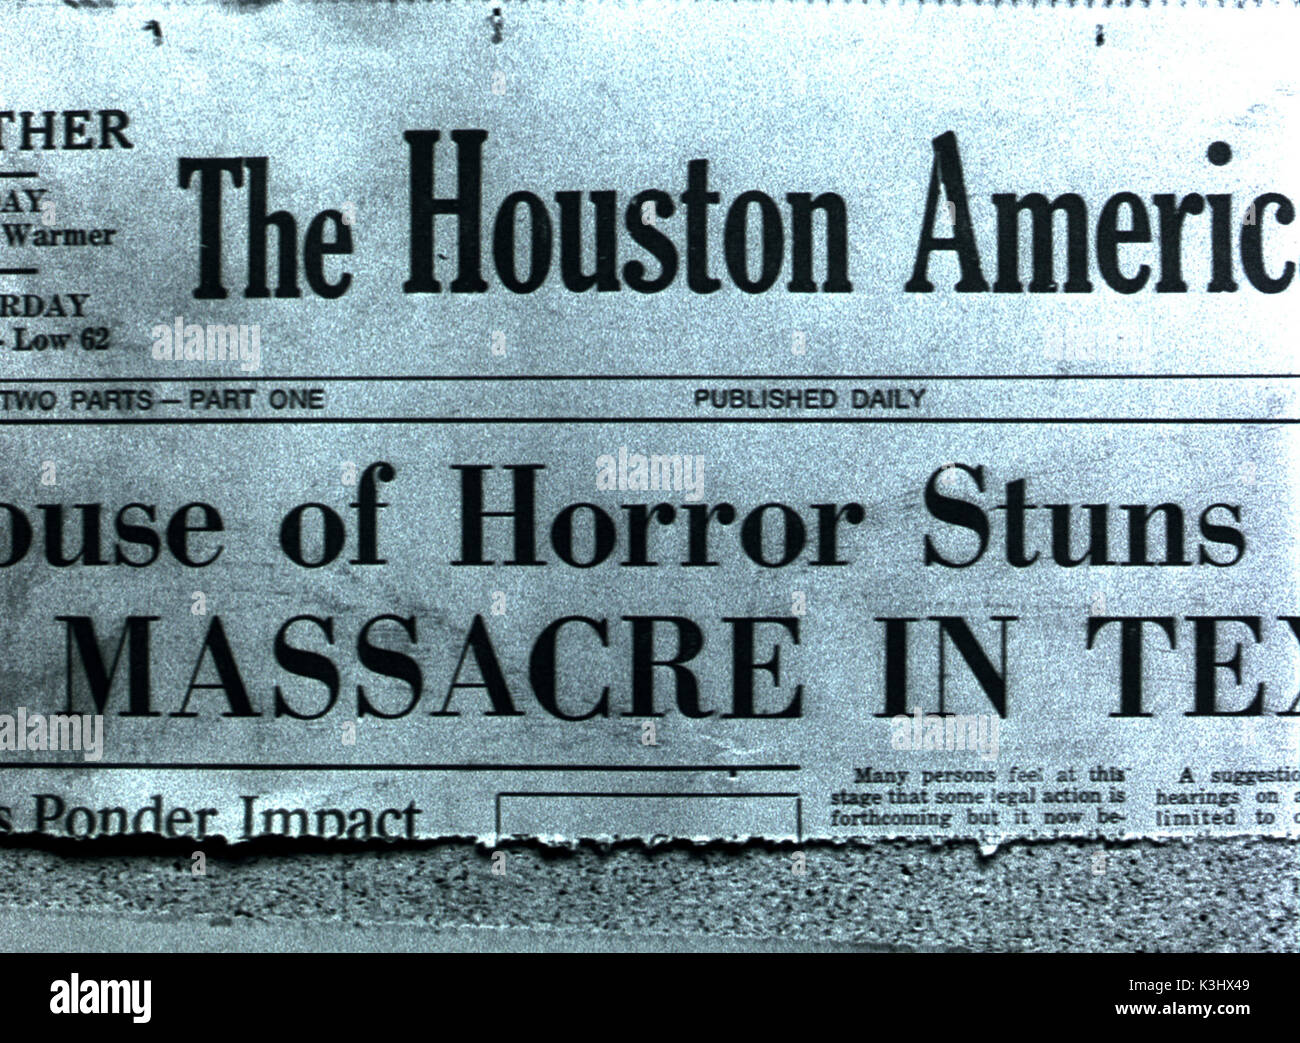 Das Texas Chainsaw Massacre Datum: 2003 Stockfoto